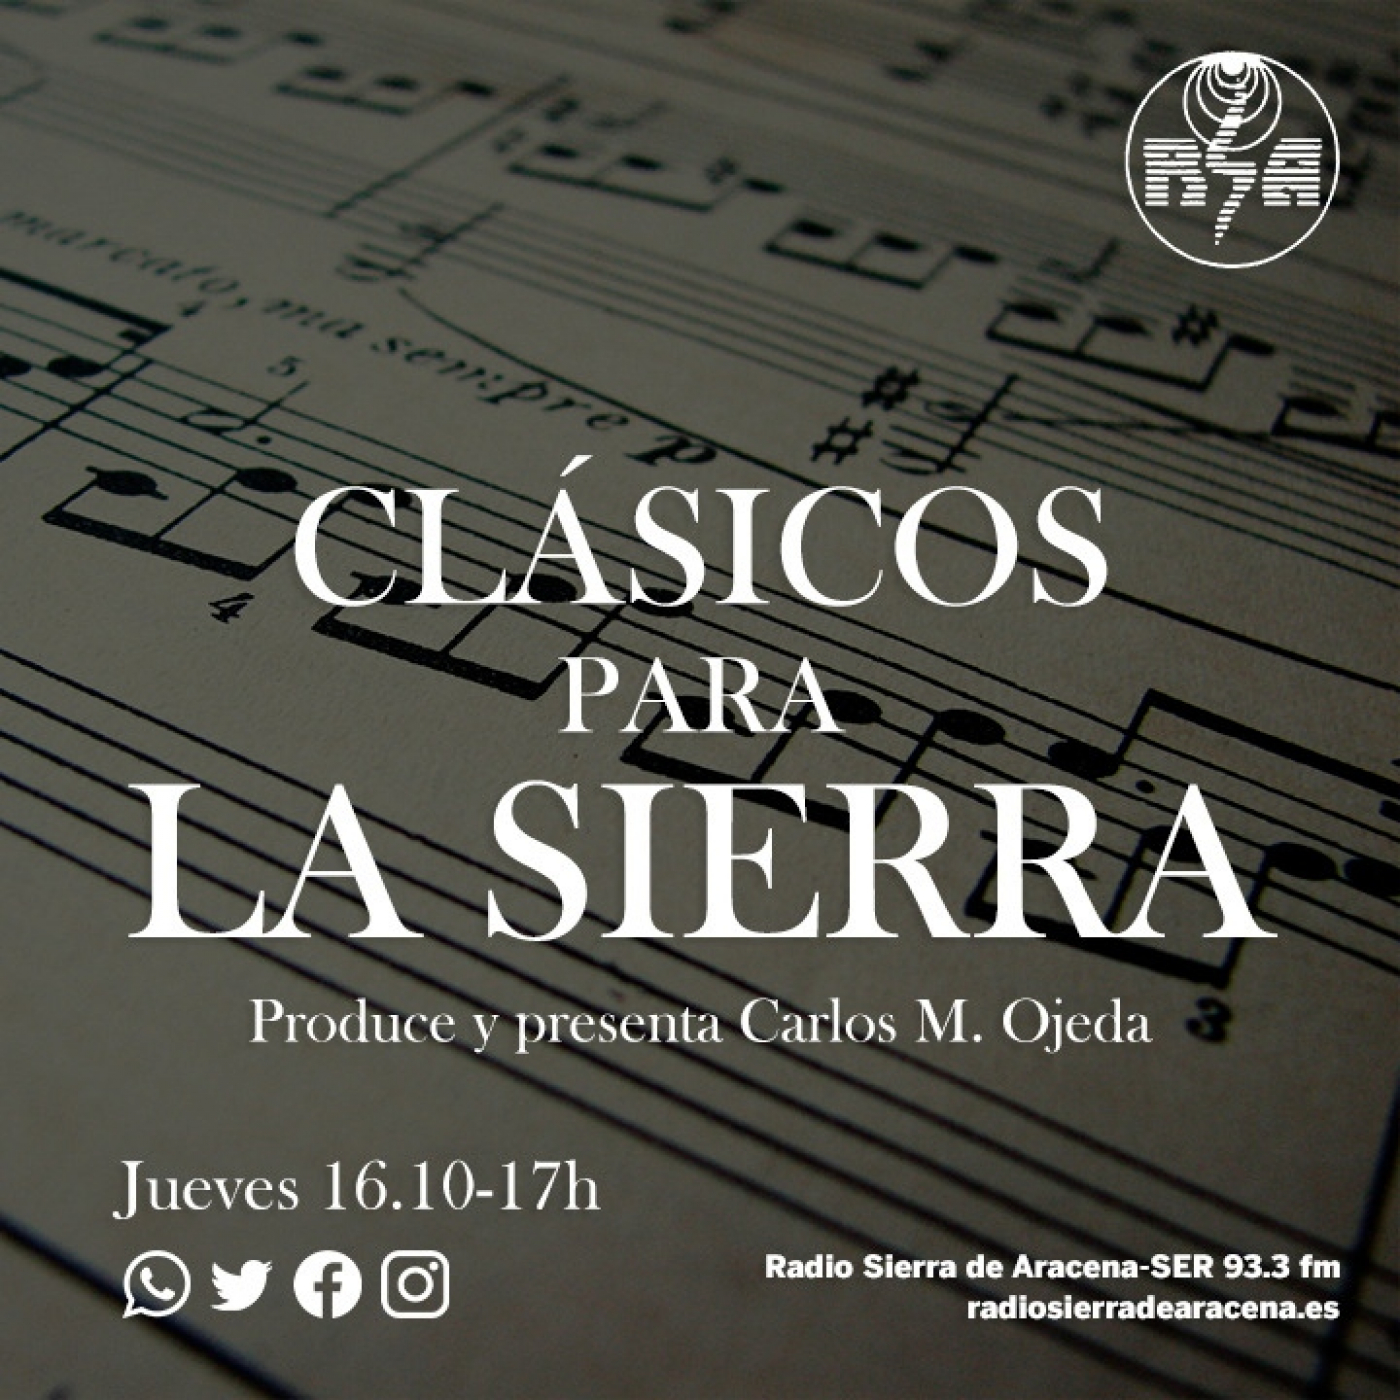 J 3/8/23 - CLÁSICOS PARA LA SIERRA - “Obras maestras”